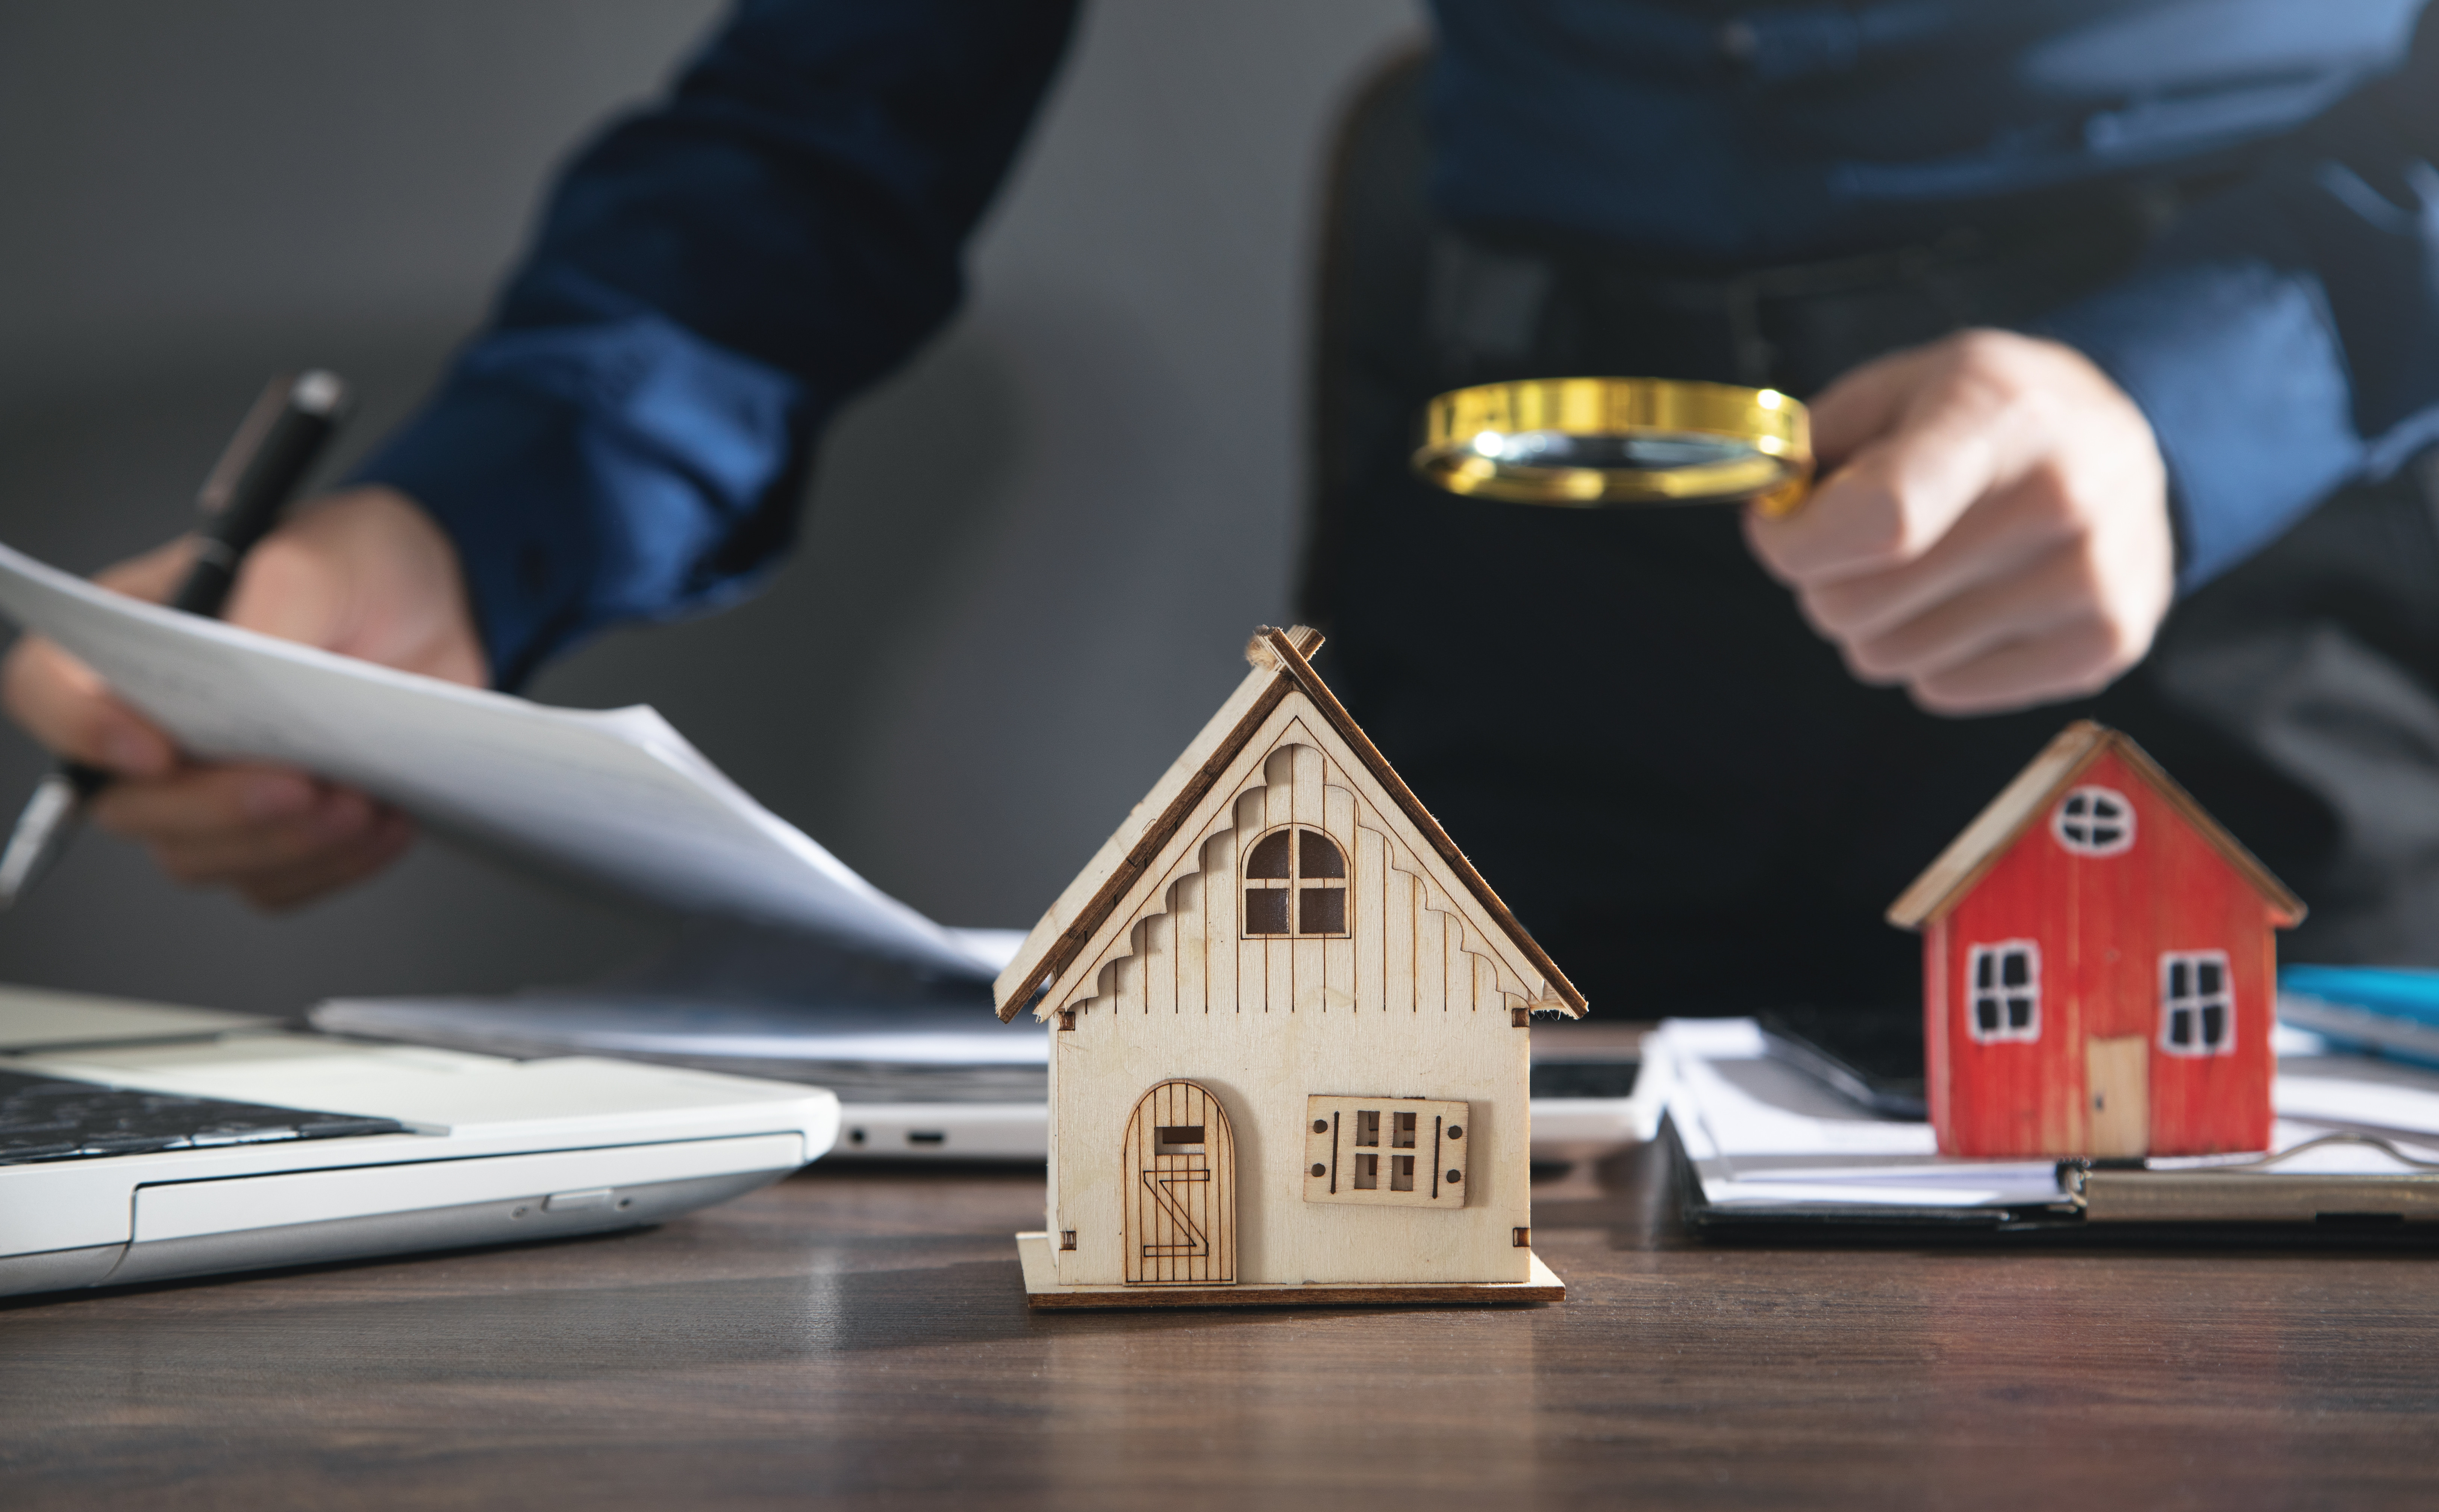 Hanover to Launch Inspection Program for Rental Housing